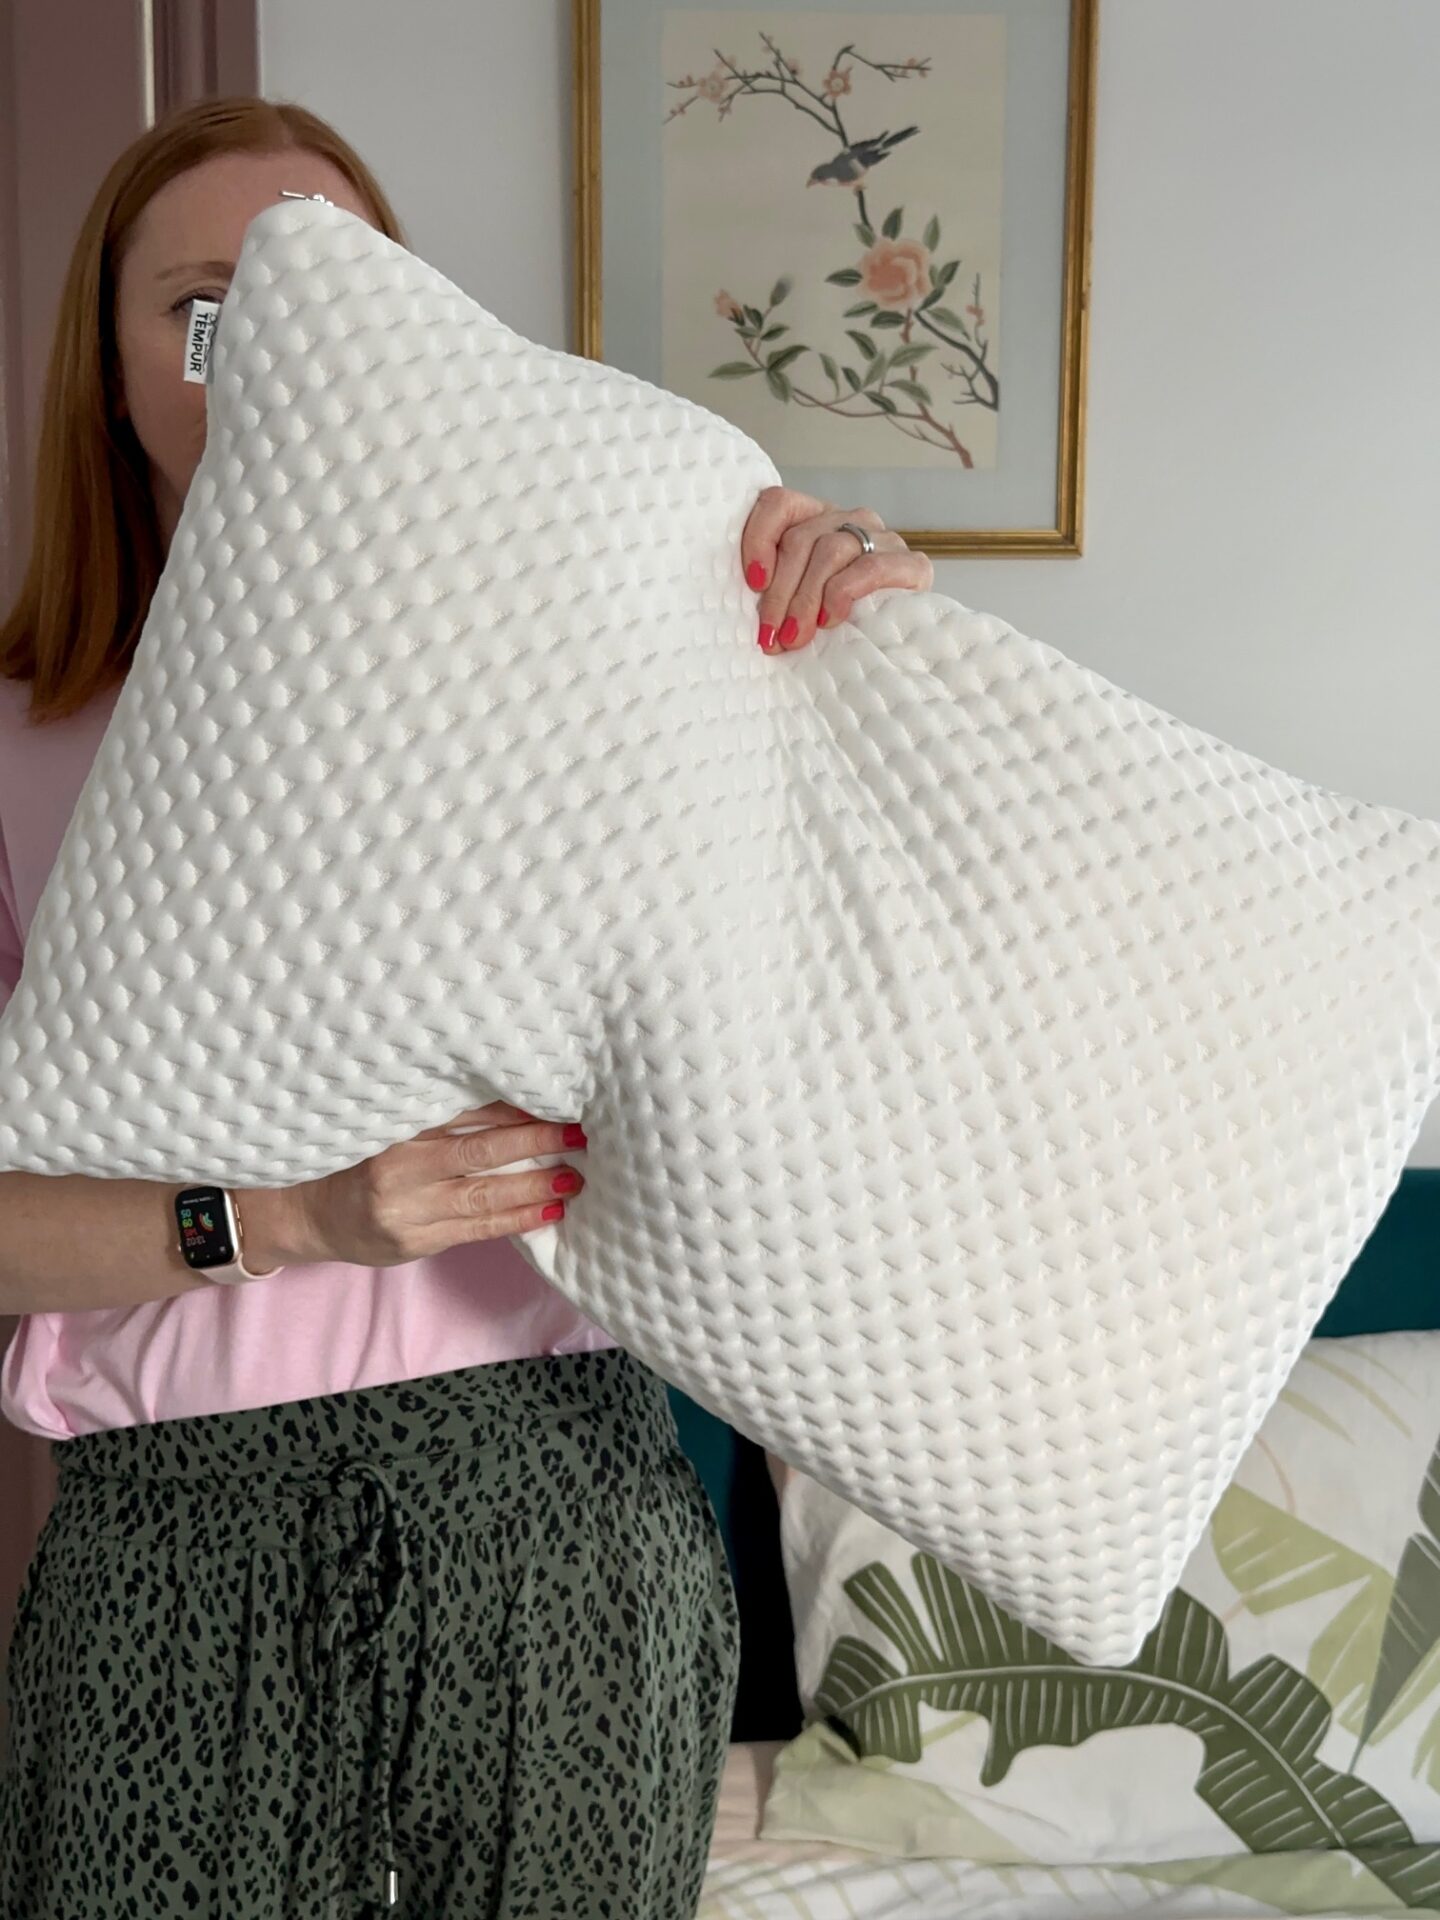 TEMPUER comfort pillow review